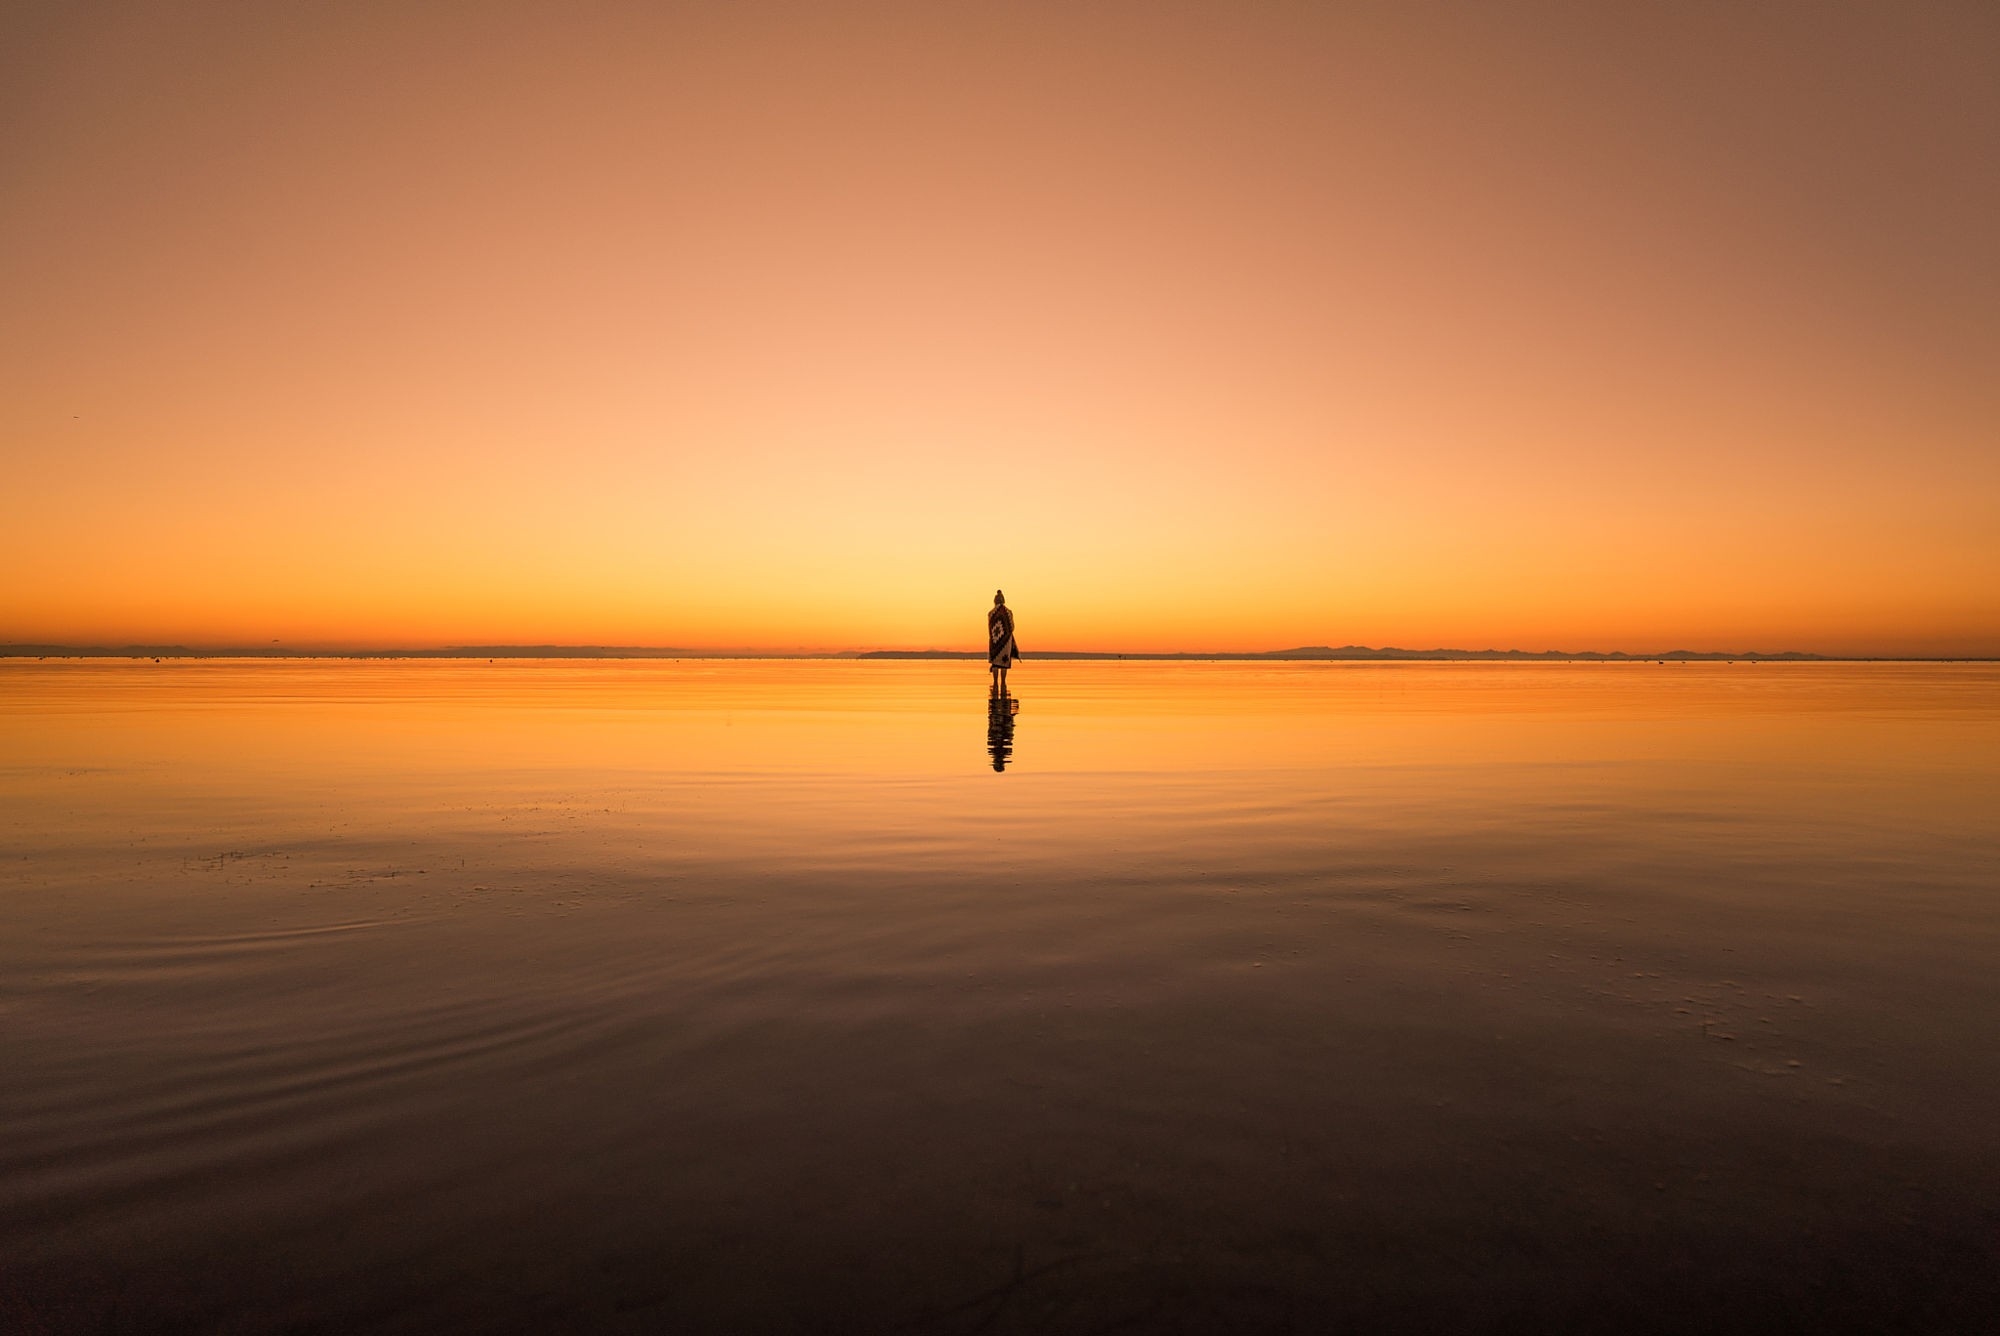 Бесплатное фото Силуэт человека на берегу при закате дня